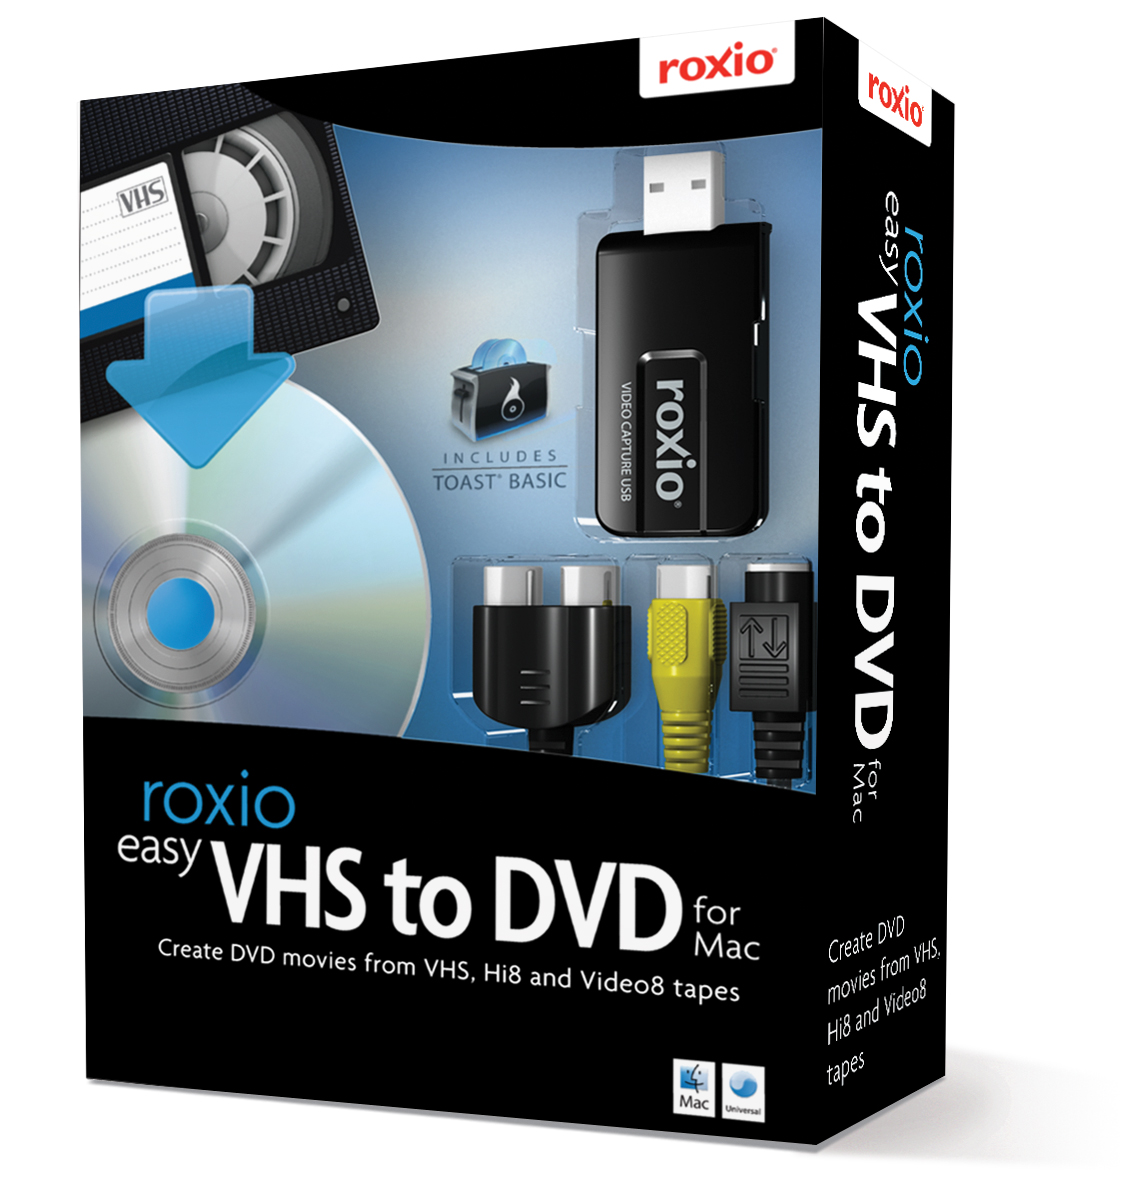 Caixa do Roxio - Easy VHS to DVD